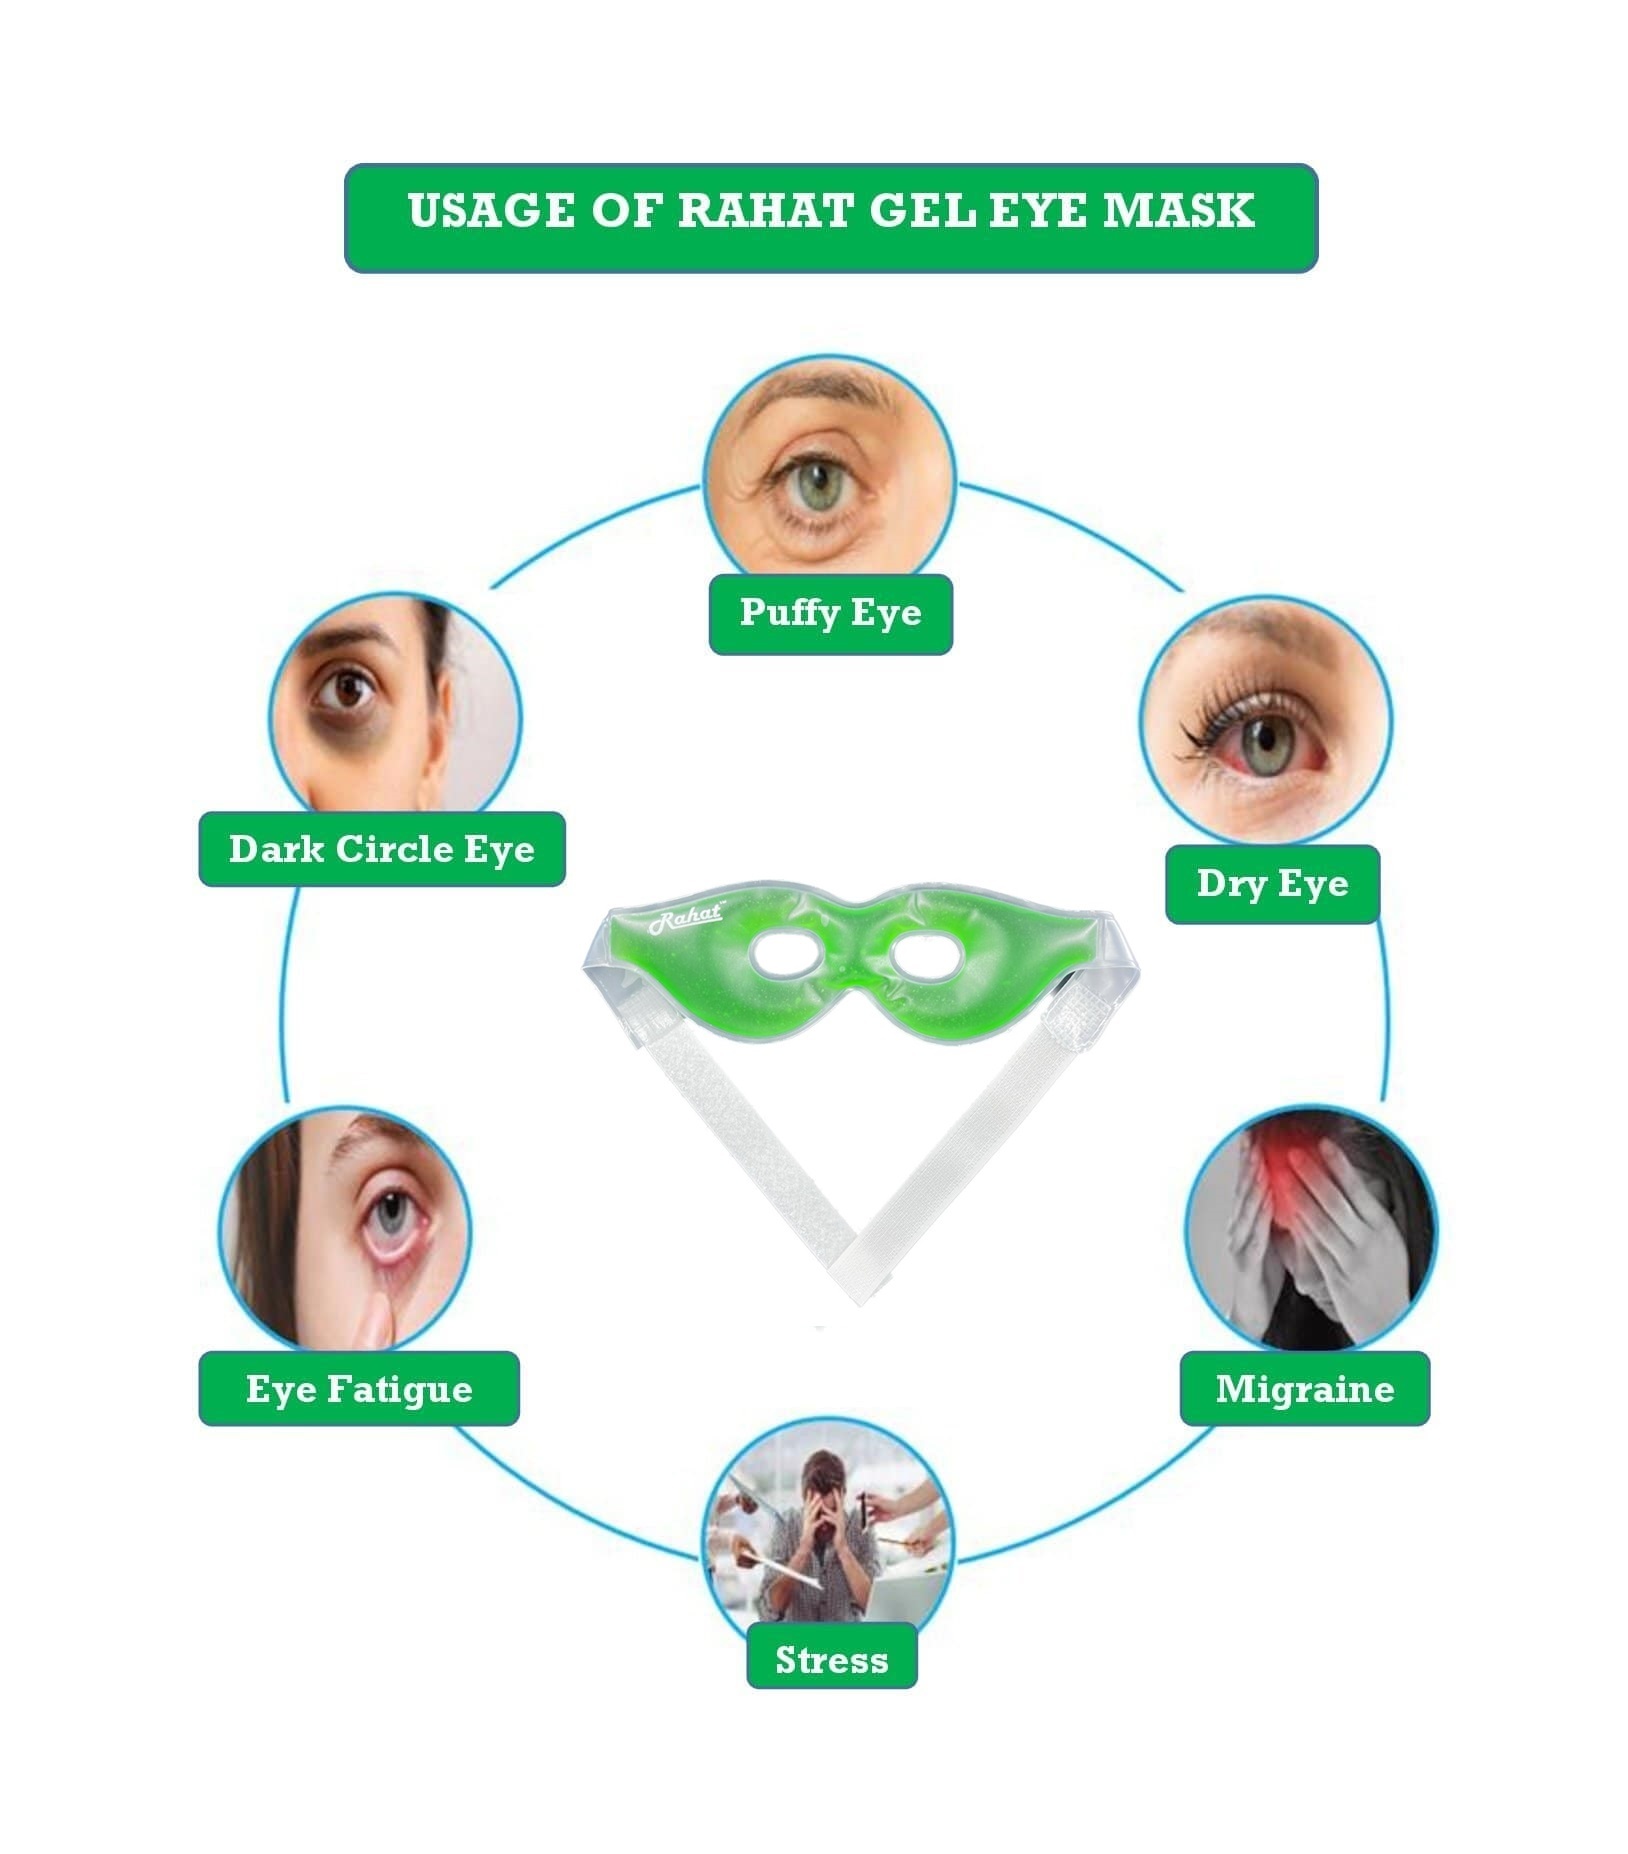 Green Gel Eye Mask